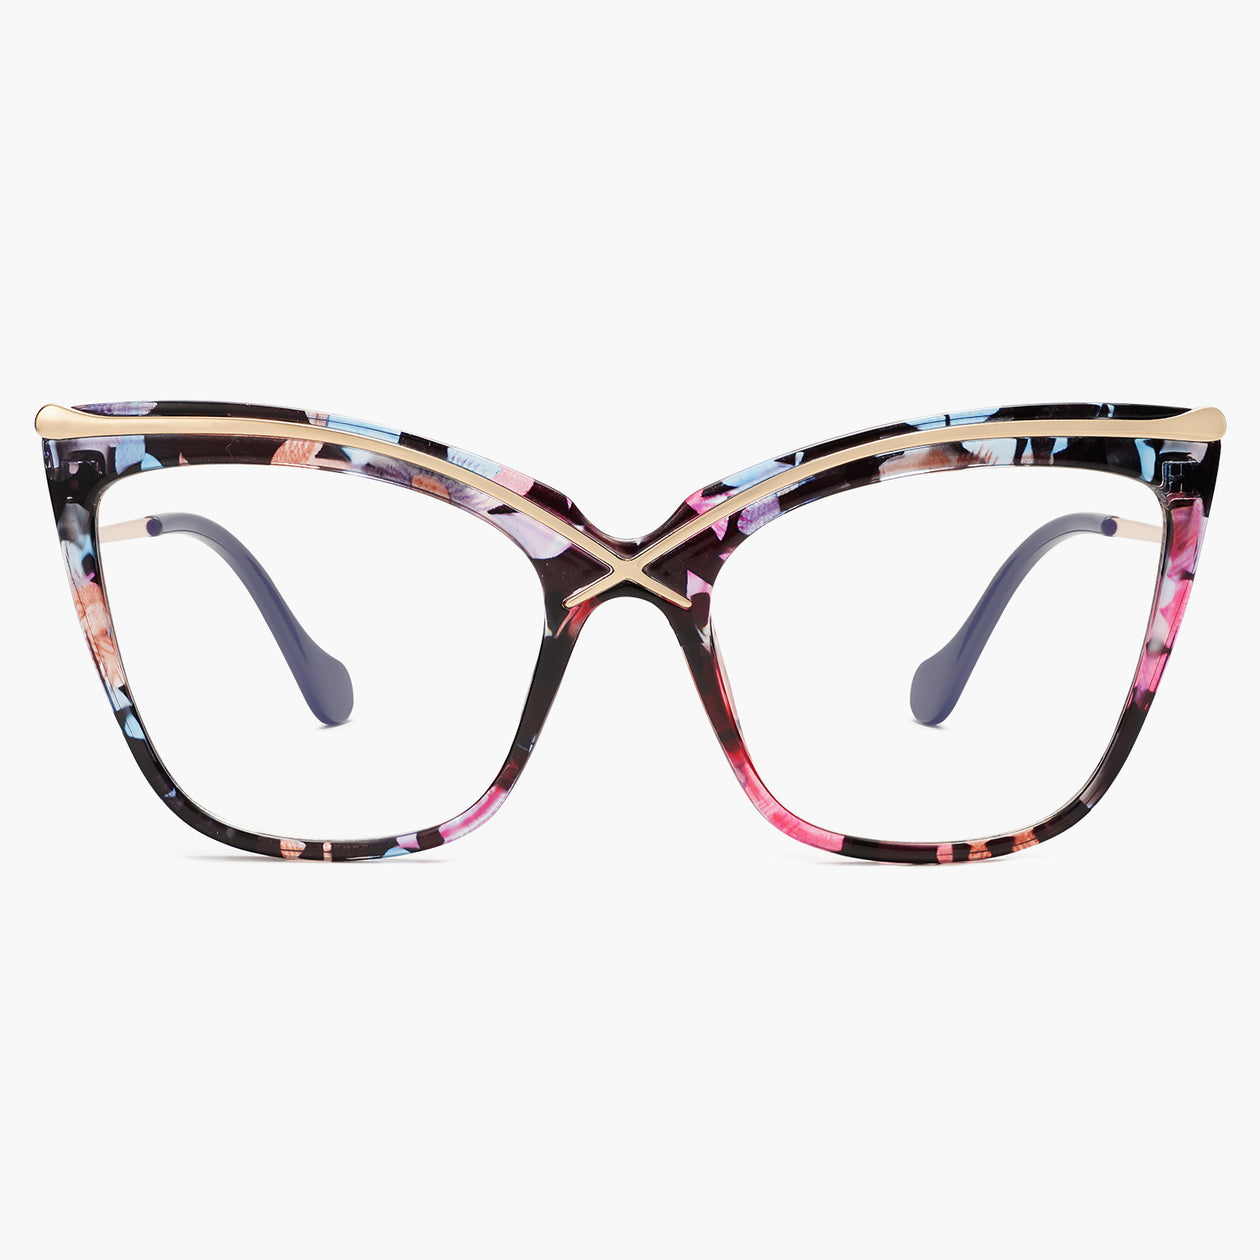 Buy Designer Tortoise Cat Eye Glasses Frame Fashion Prescription Glasses Online | Signal | Sojos Vision